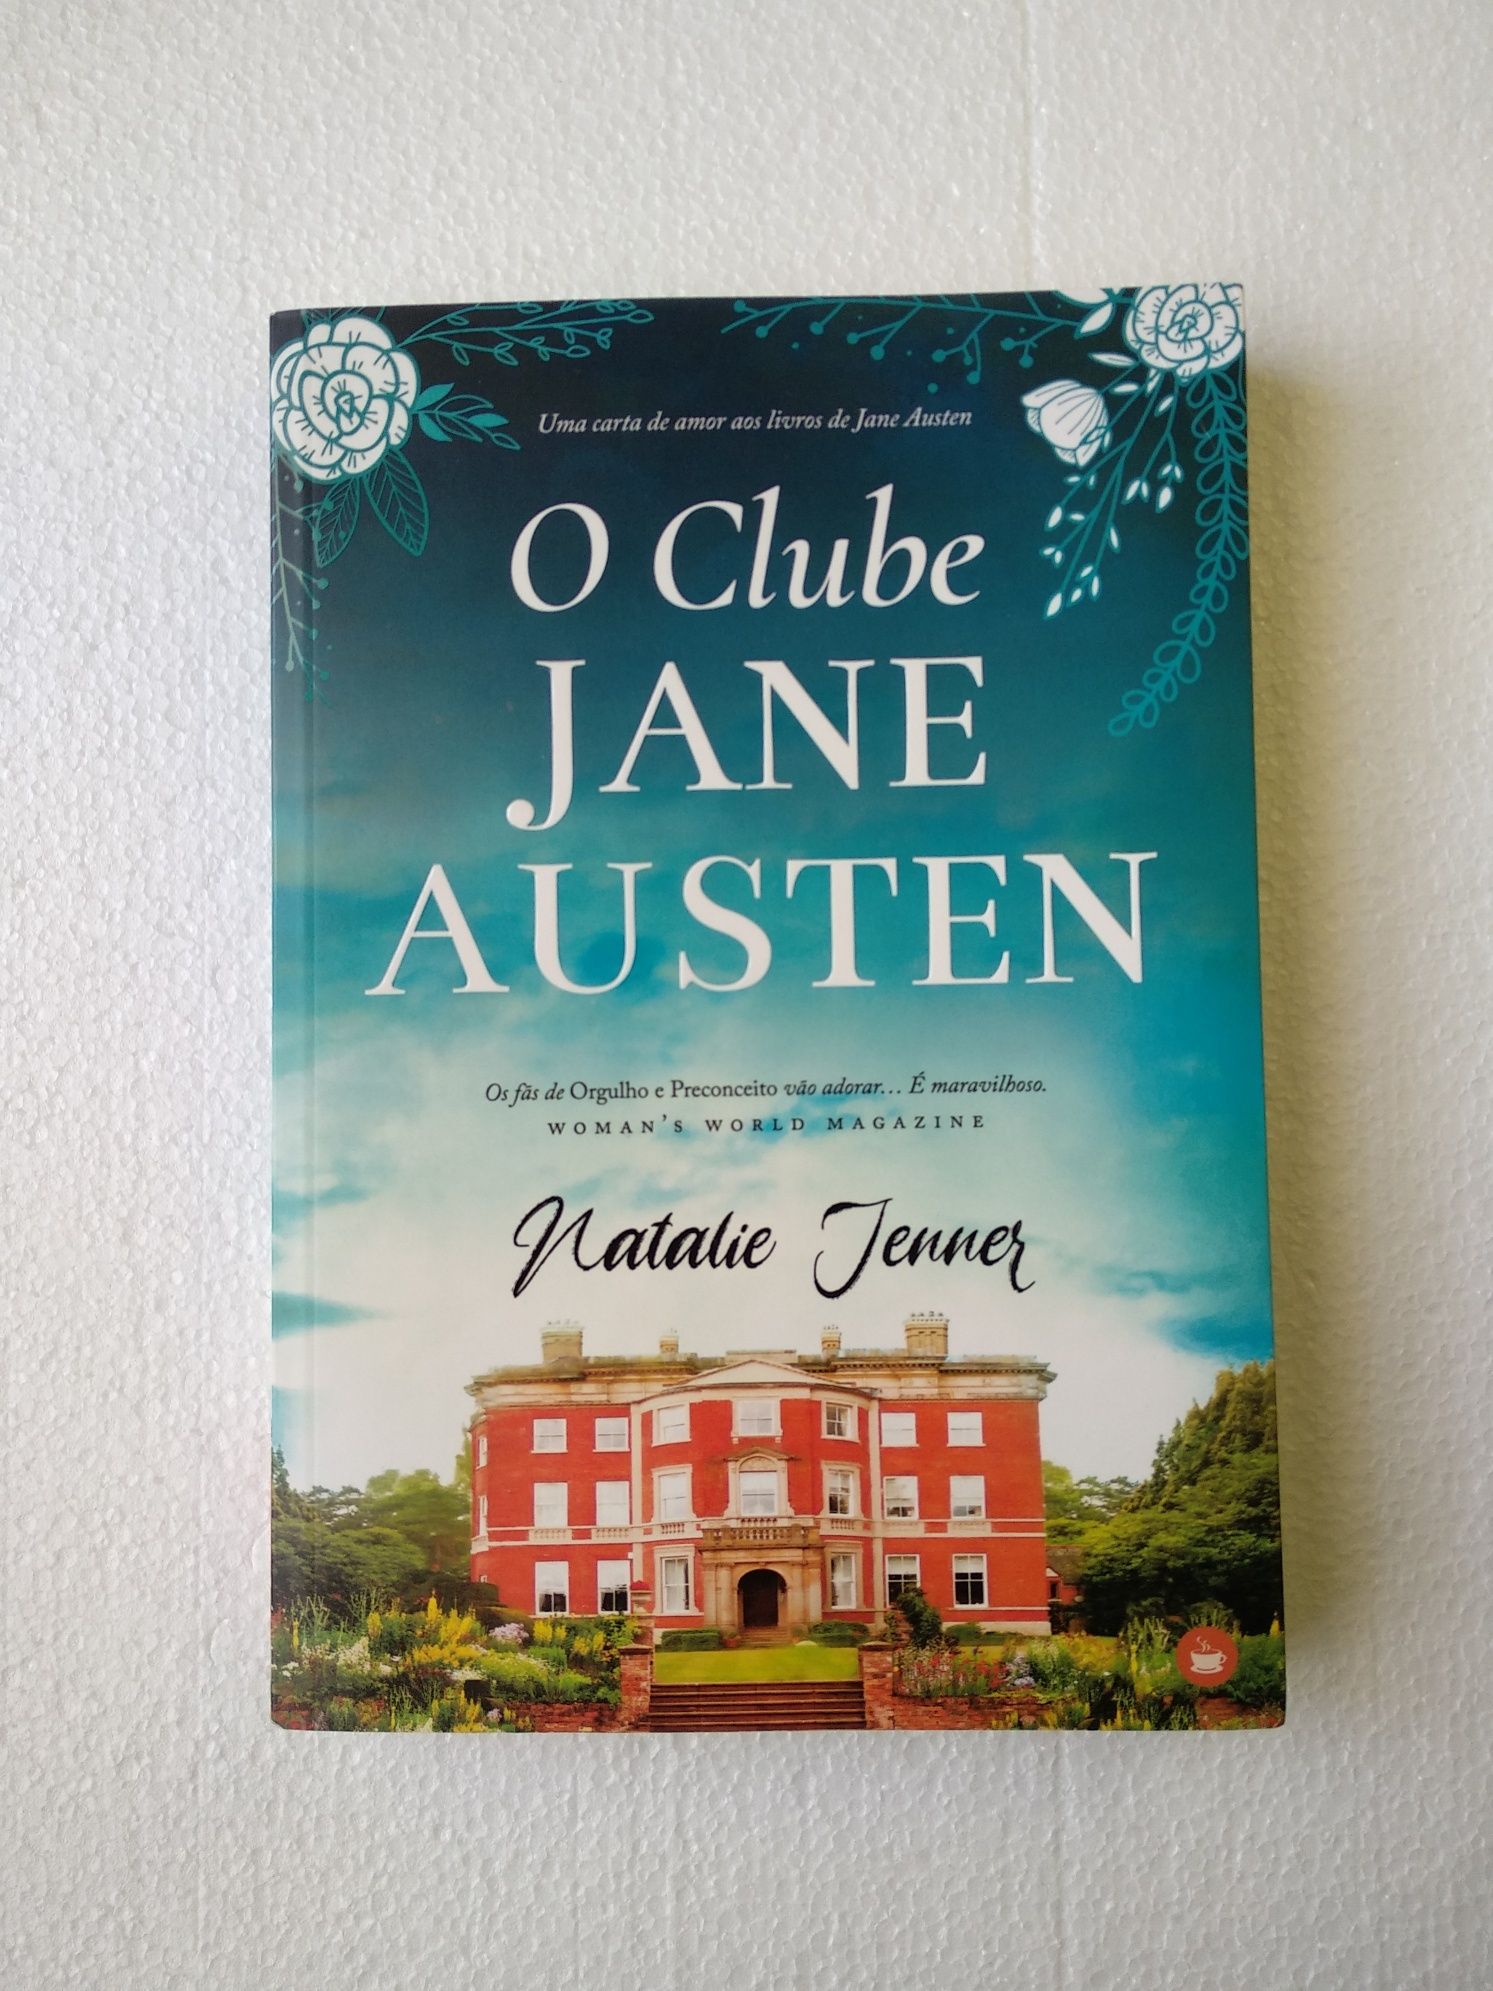 "O Clube Jane Austen" de Natalie Jenner